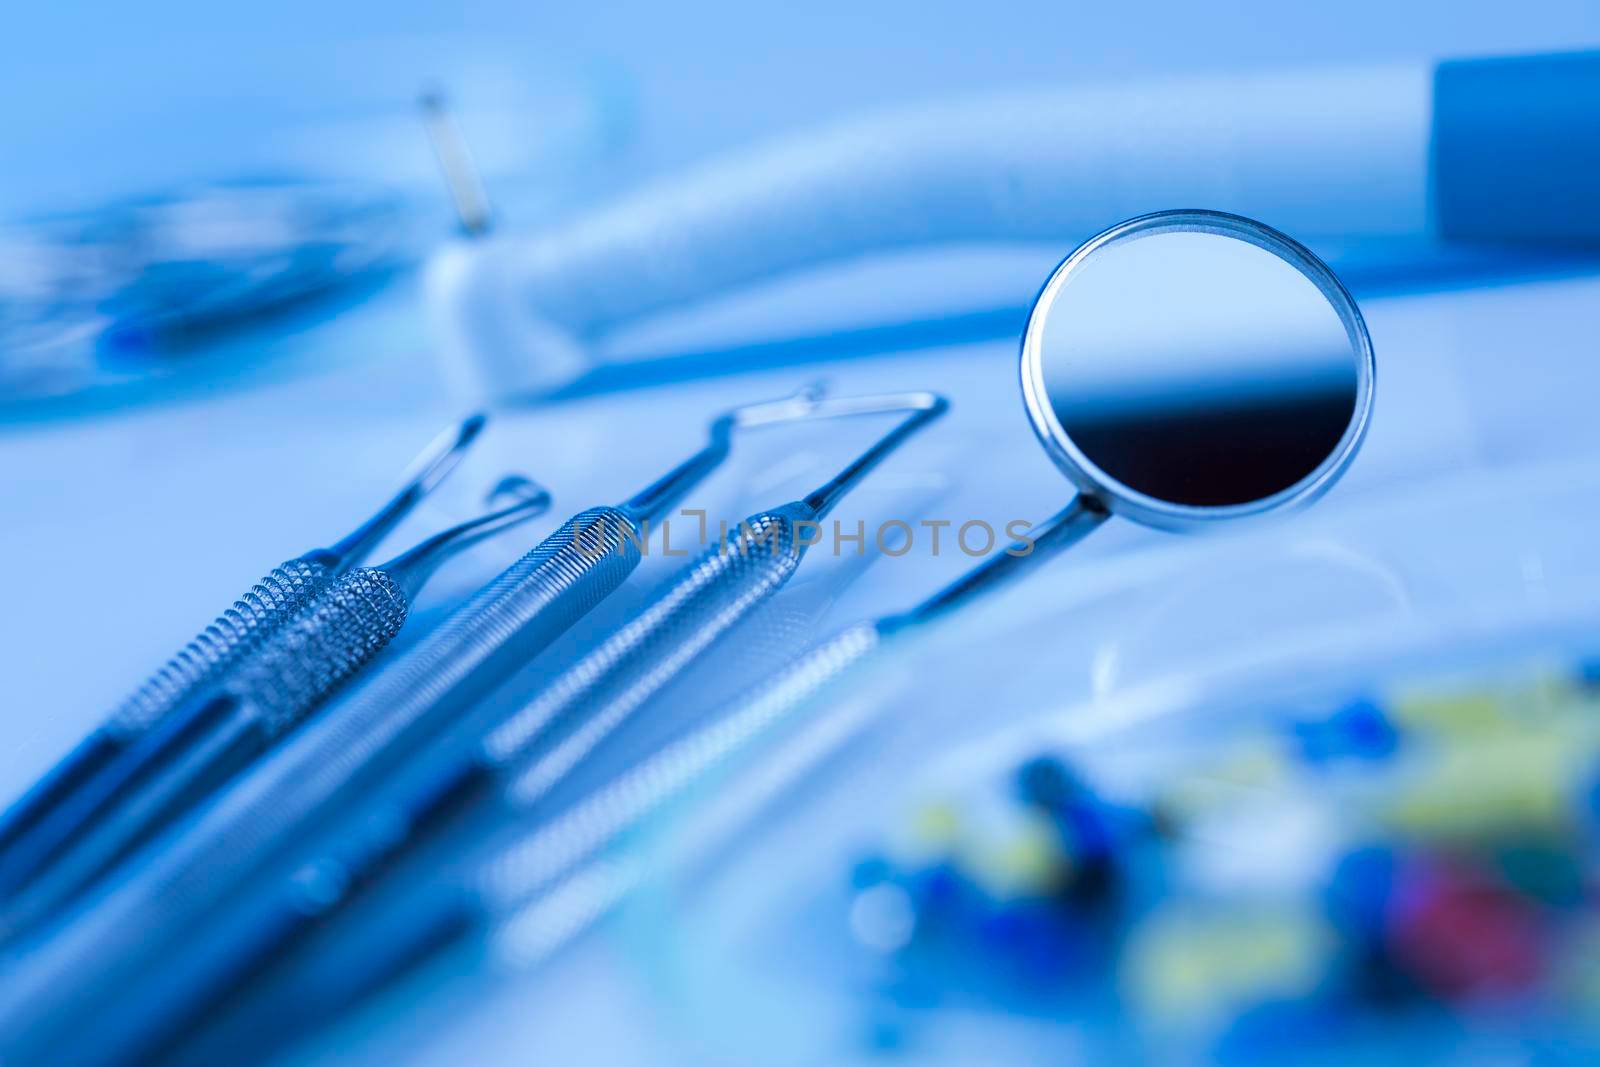 Dental, medicine equipment tools by JanPietruszka